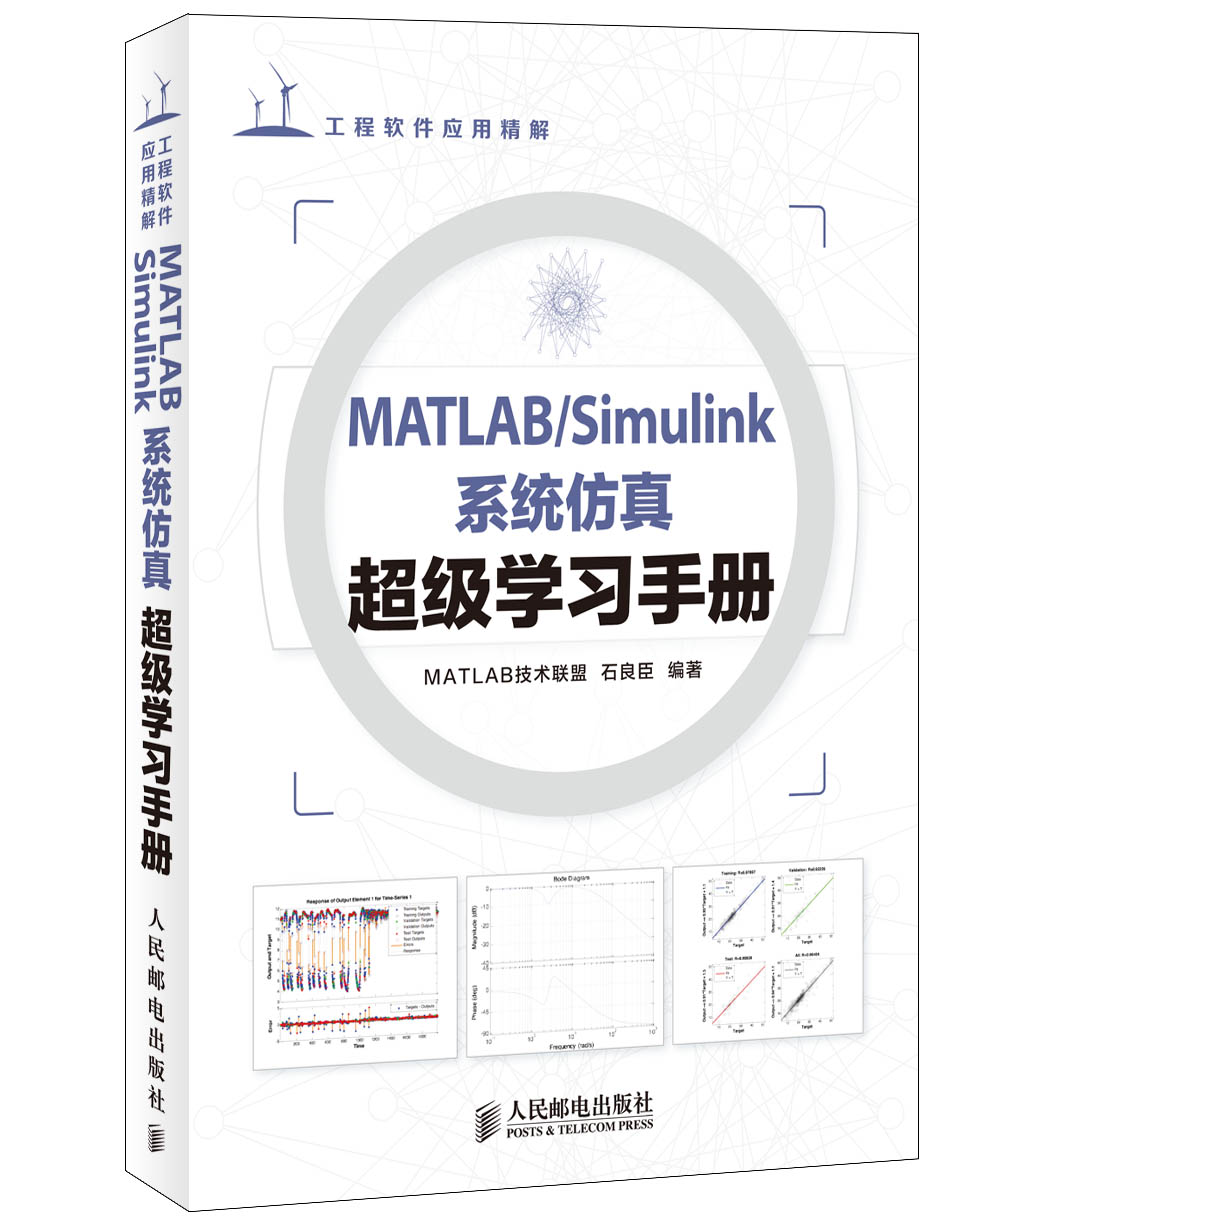 MATLAB/Simulink系统仿真超级学习手册 [平装] 